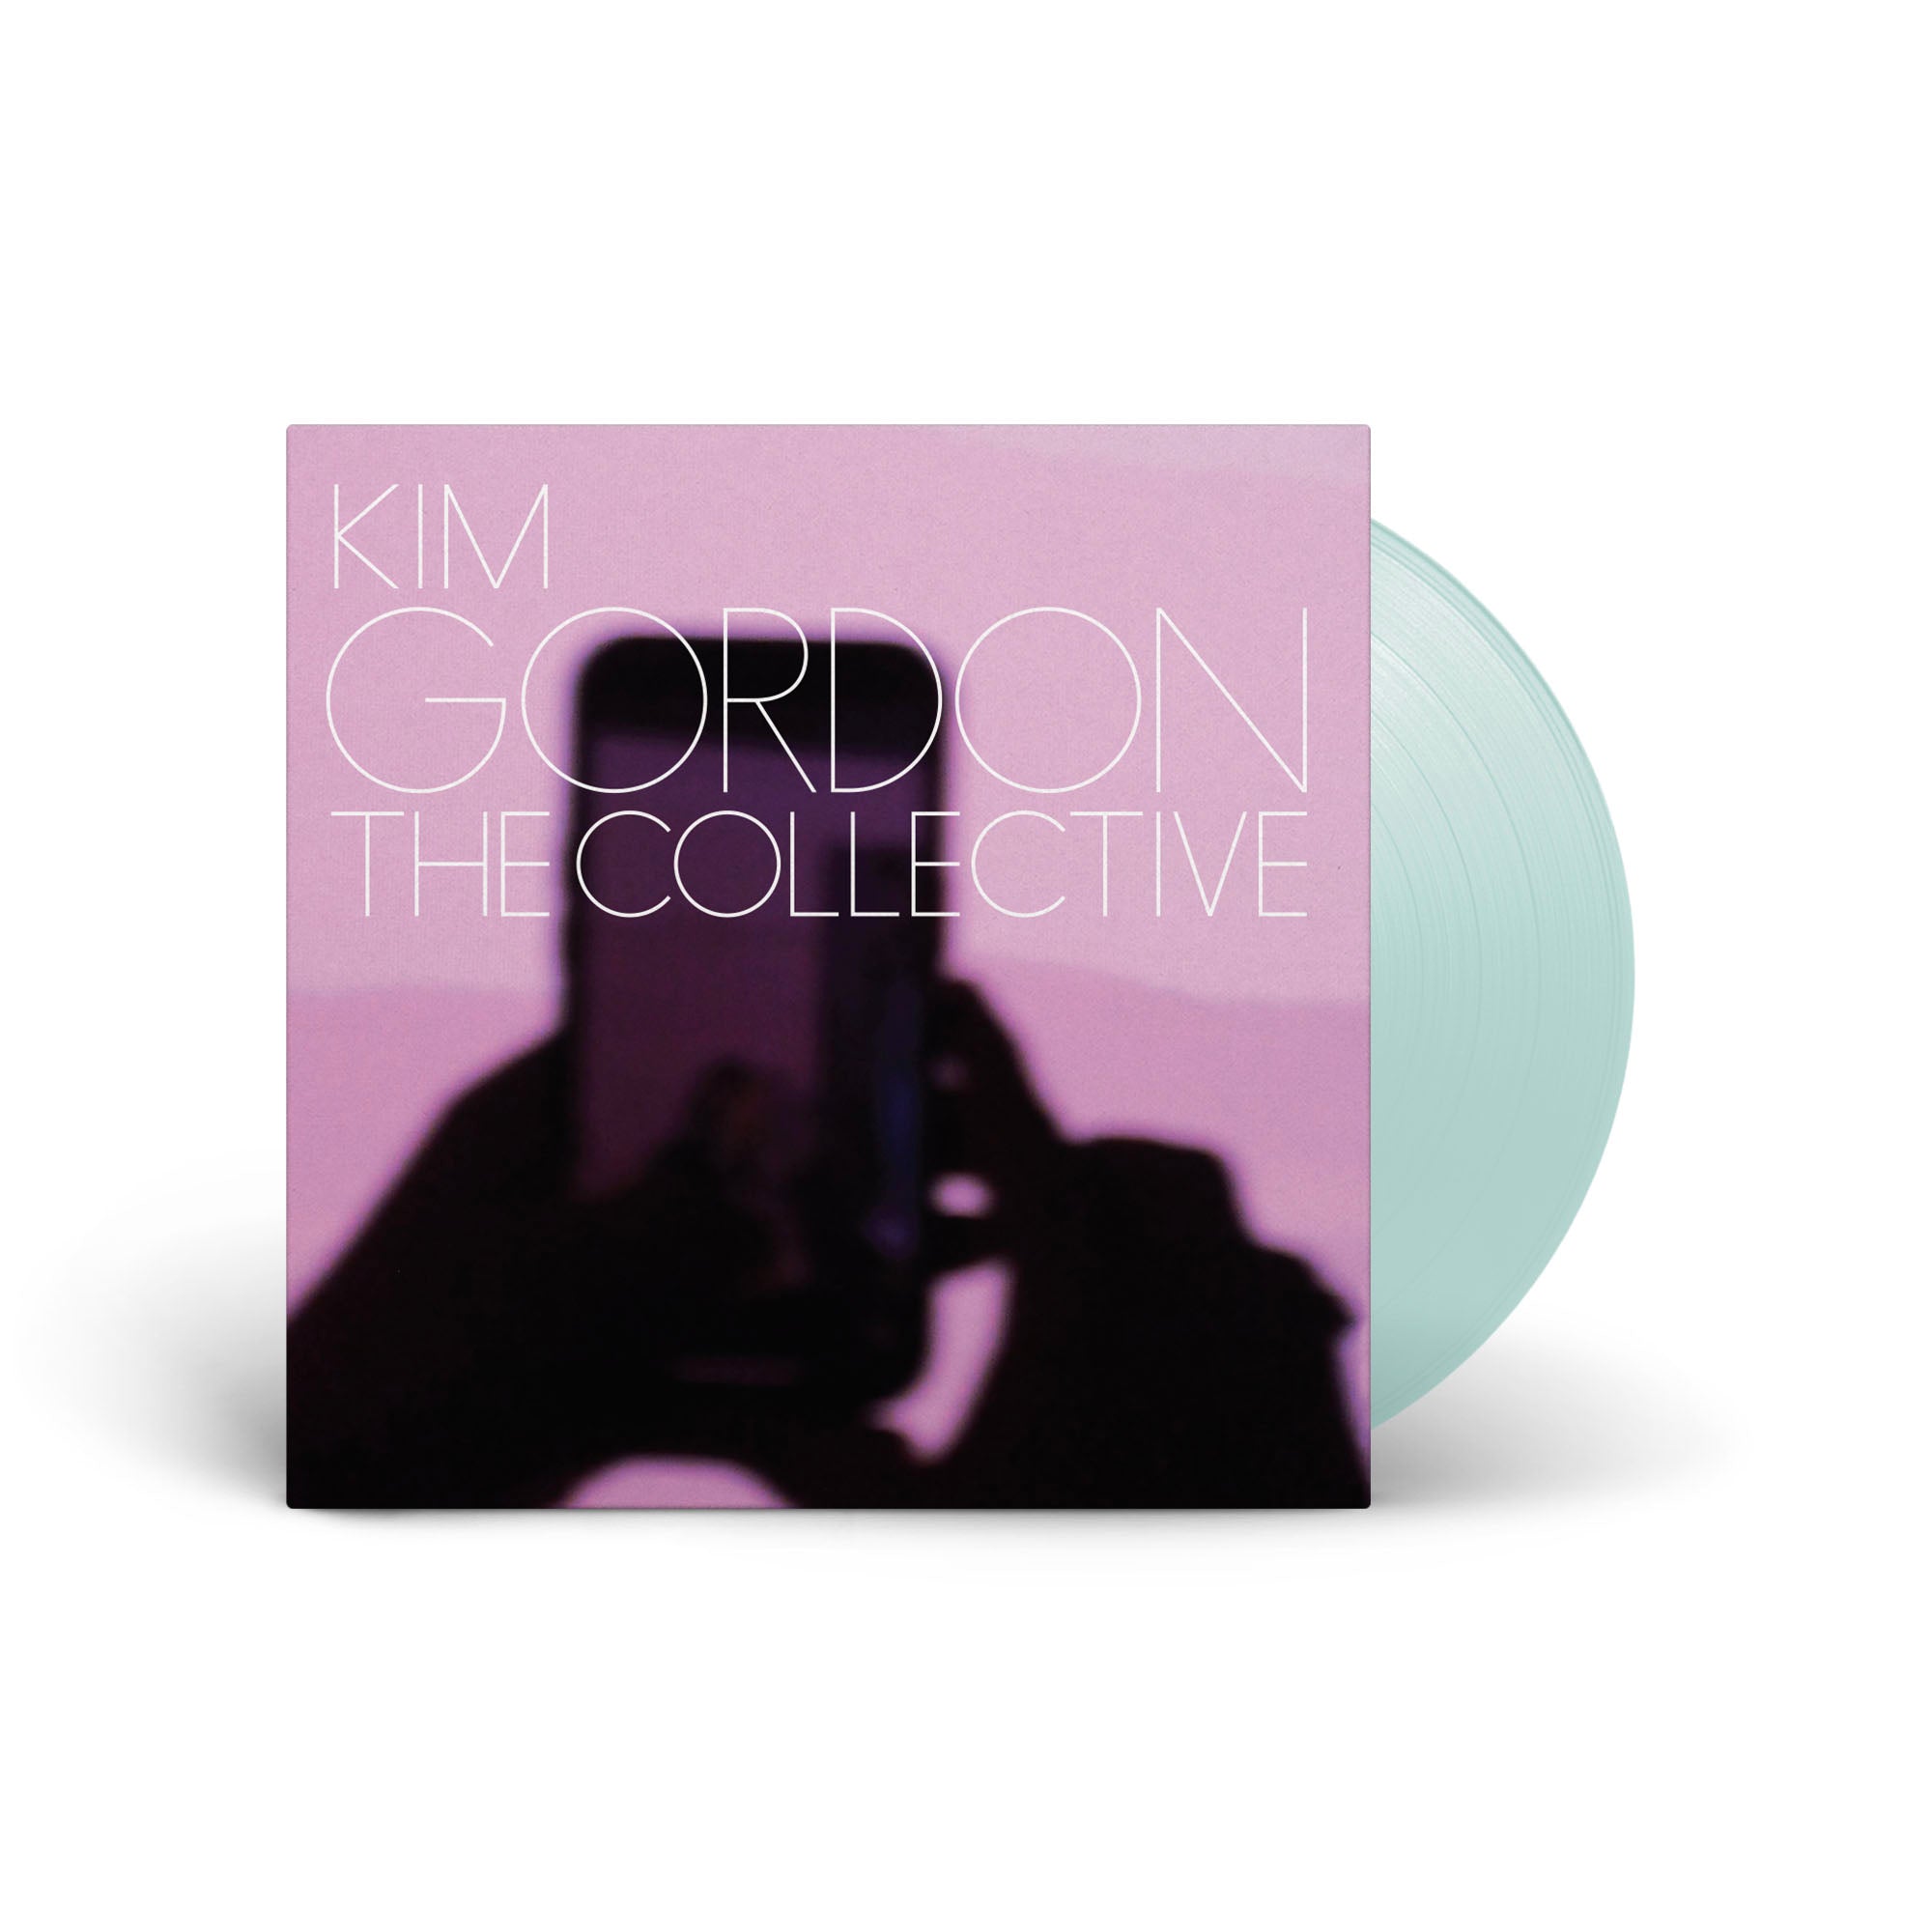 Kim Gordon - The Collective: Limited Coke Bottle Green Vinyl LP